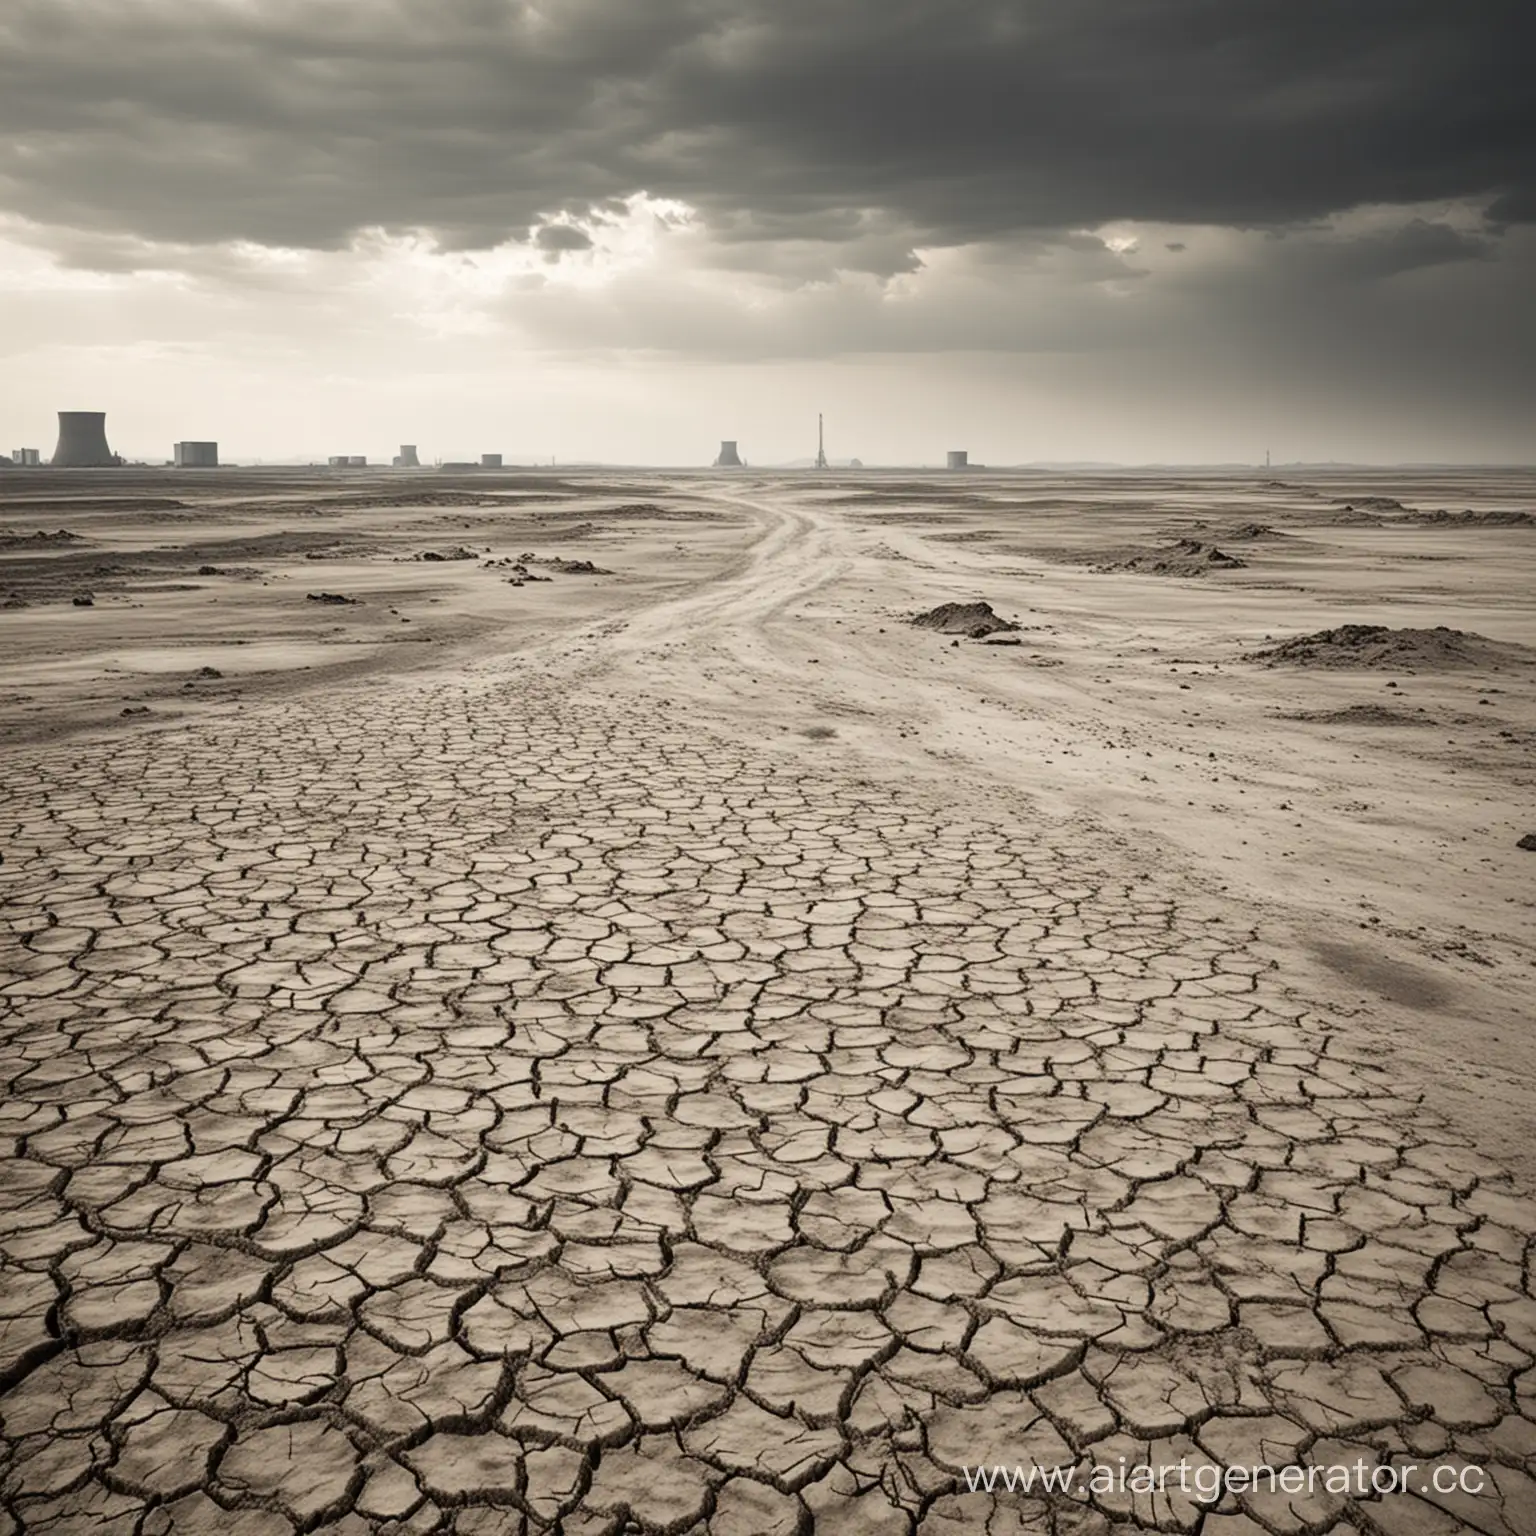  nuclear empty sandy dusty wasteland with a greyish atmosphere